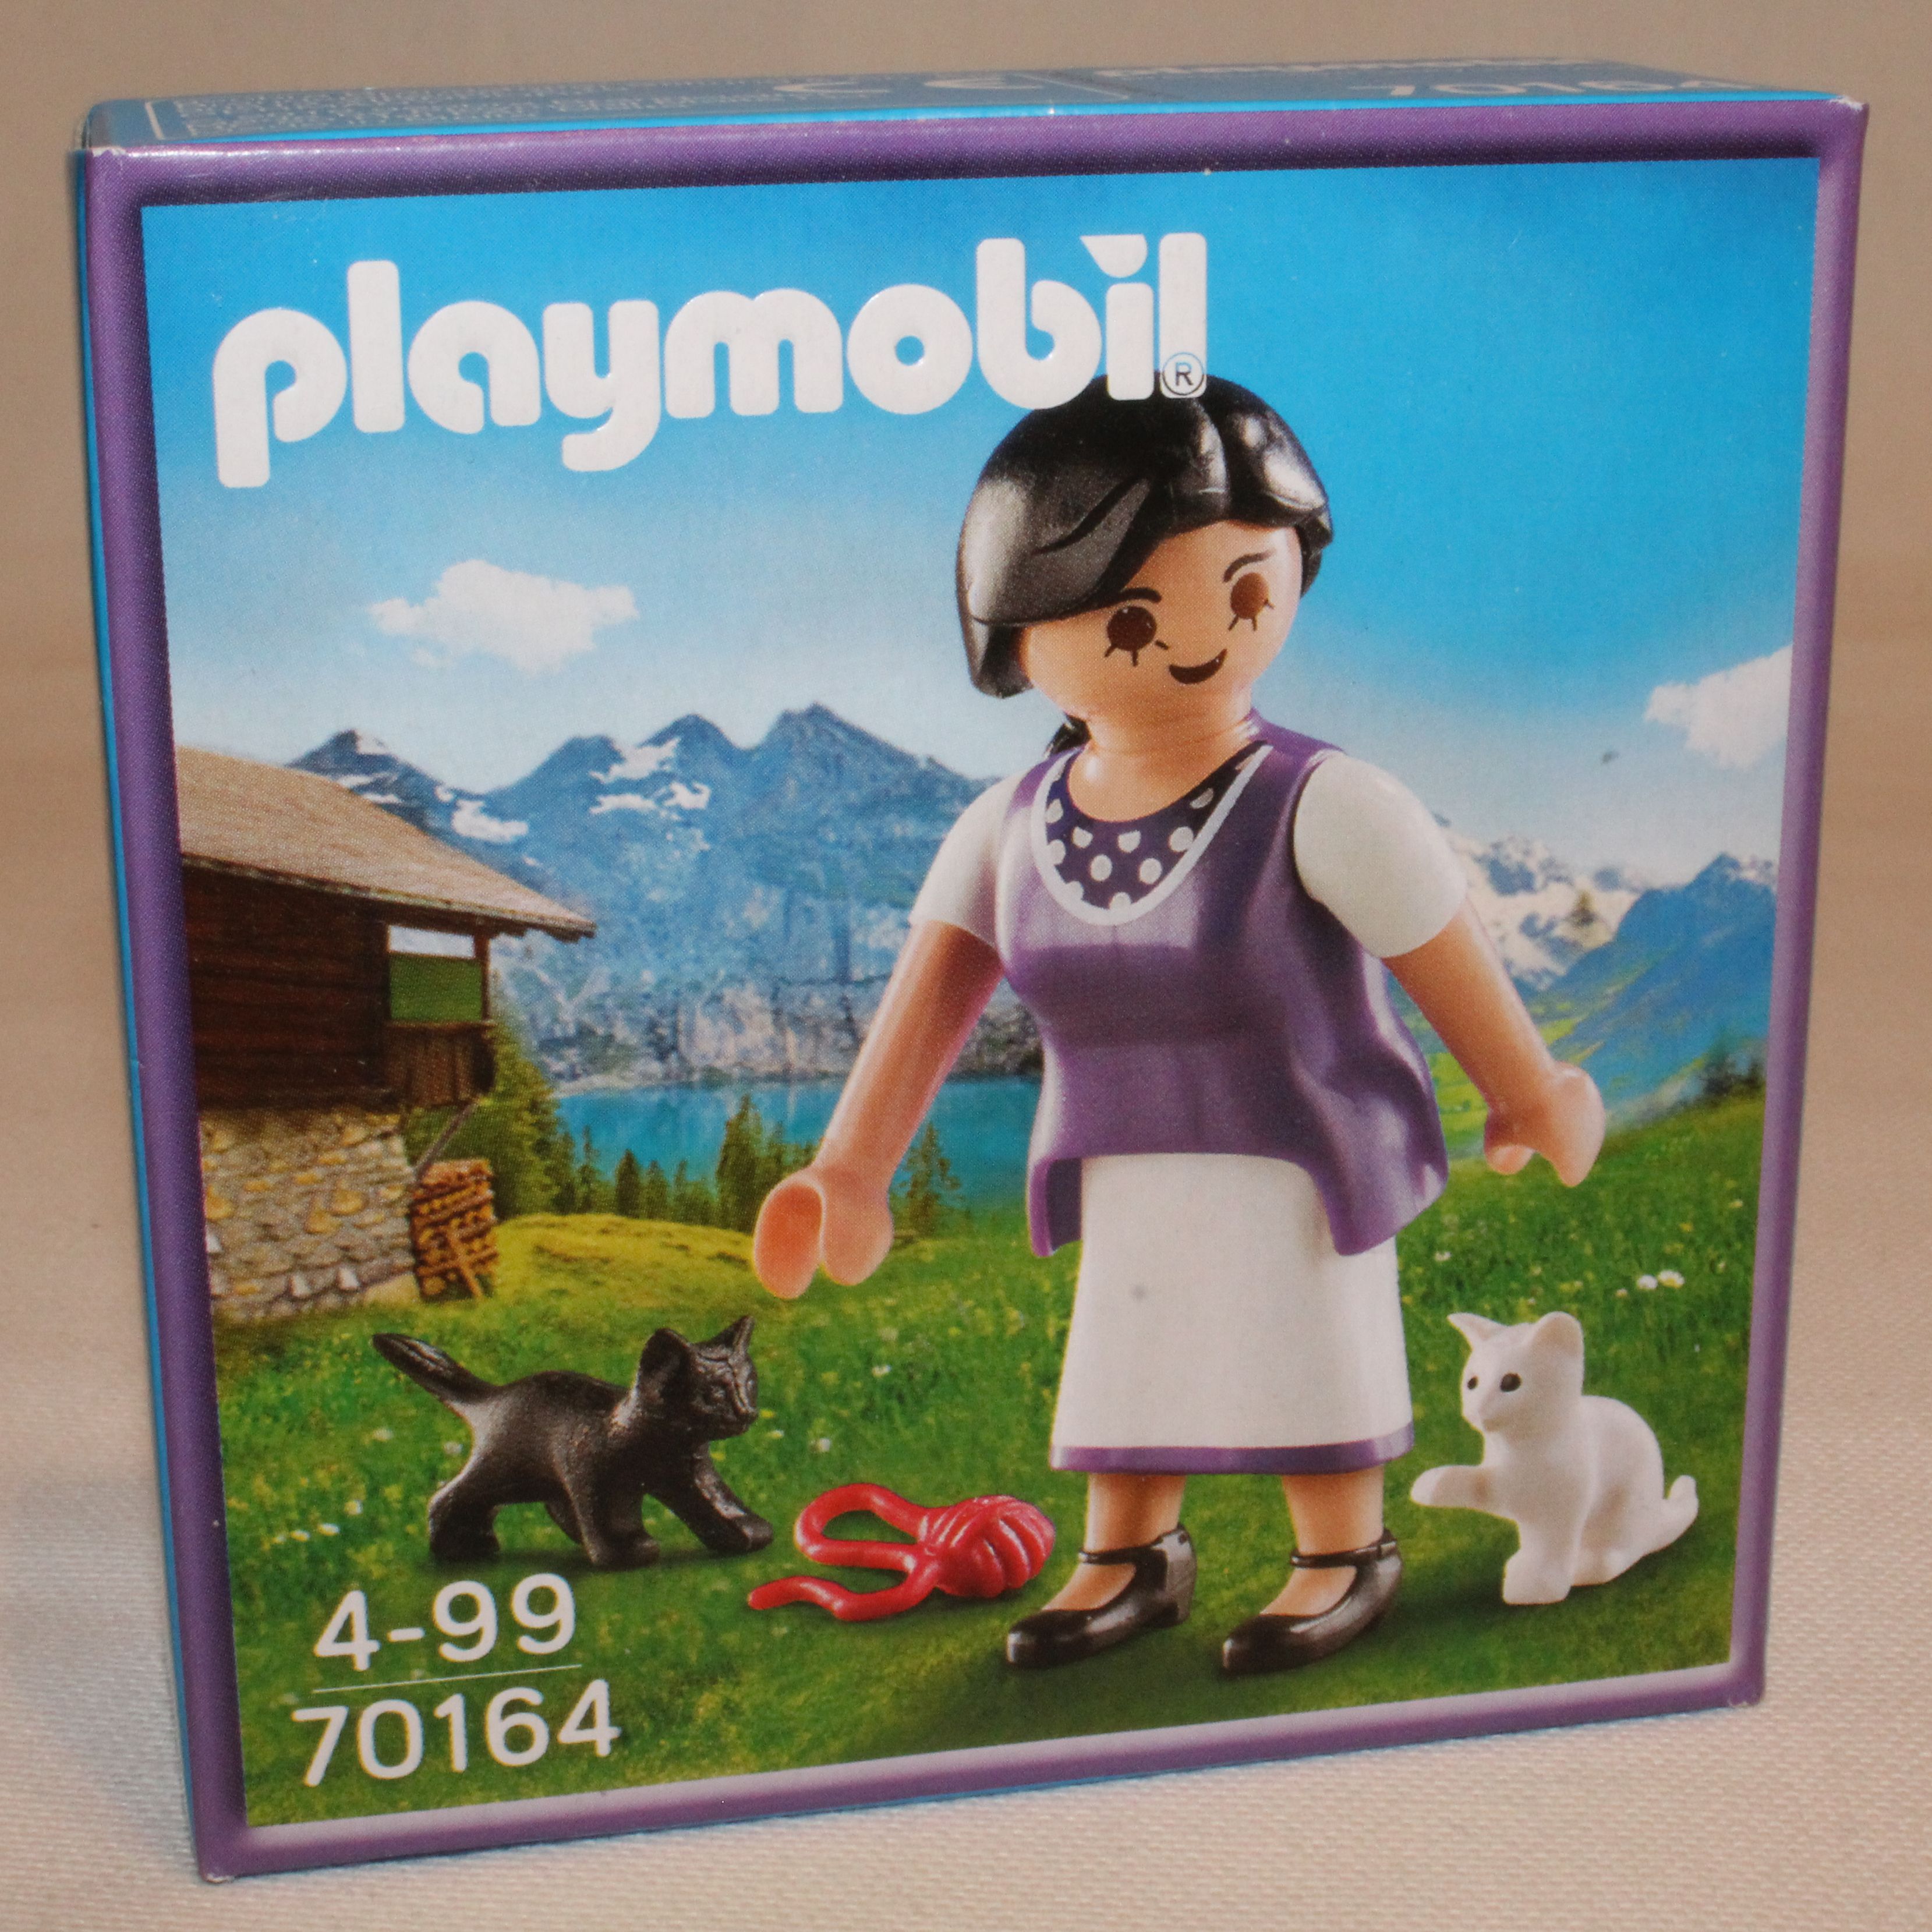 Playmobil Milka Bäuerin mit Ziege 70163 Neu & OVP Promotion Sonderedition 